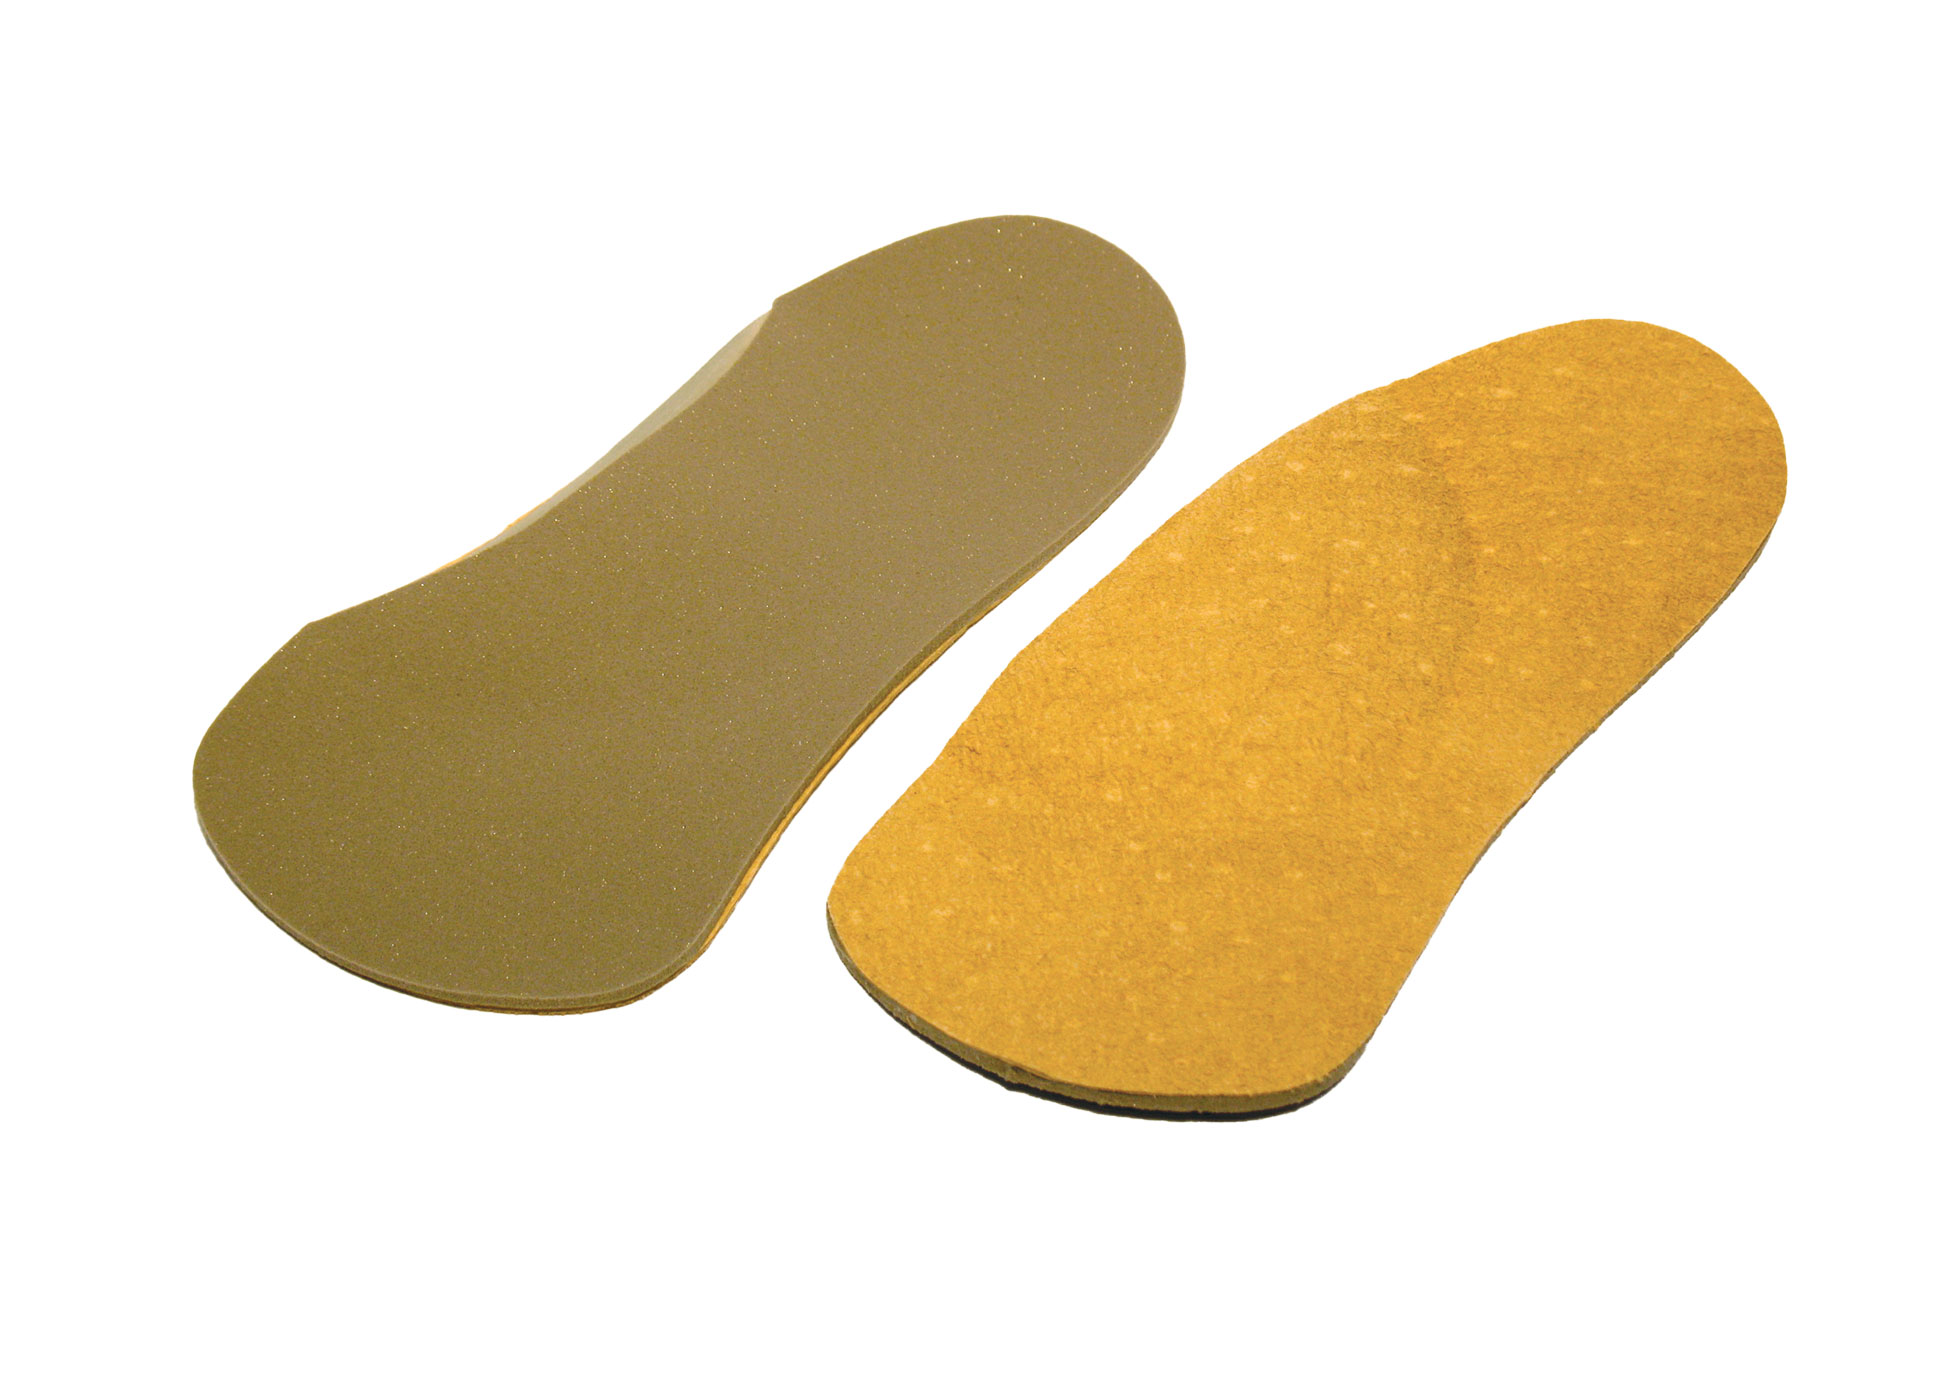 Haplabase Orthotic - Foot Supports - Model 407 - Per Pair - Valgus Pads - Mens 9 - 11